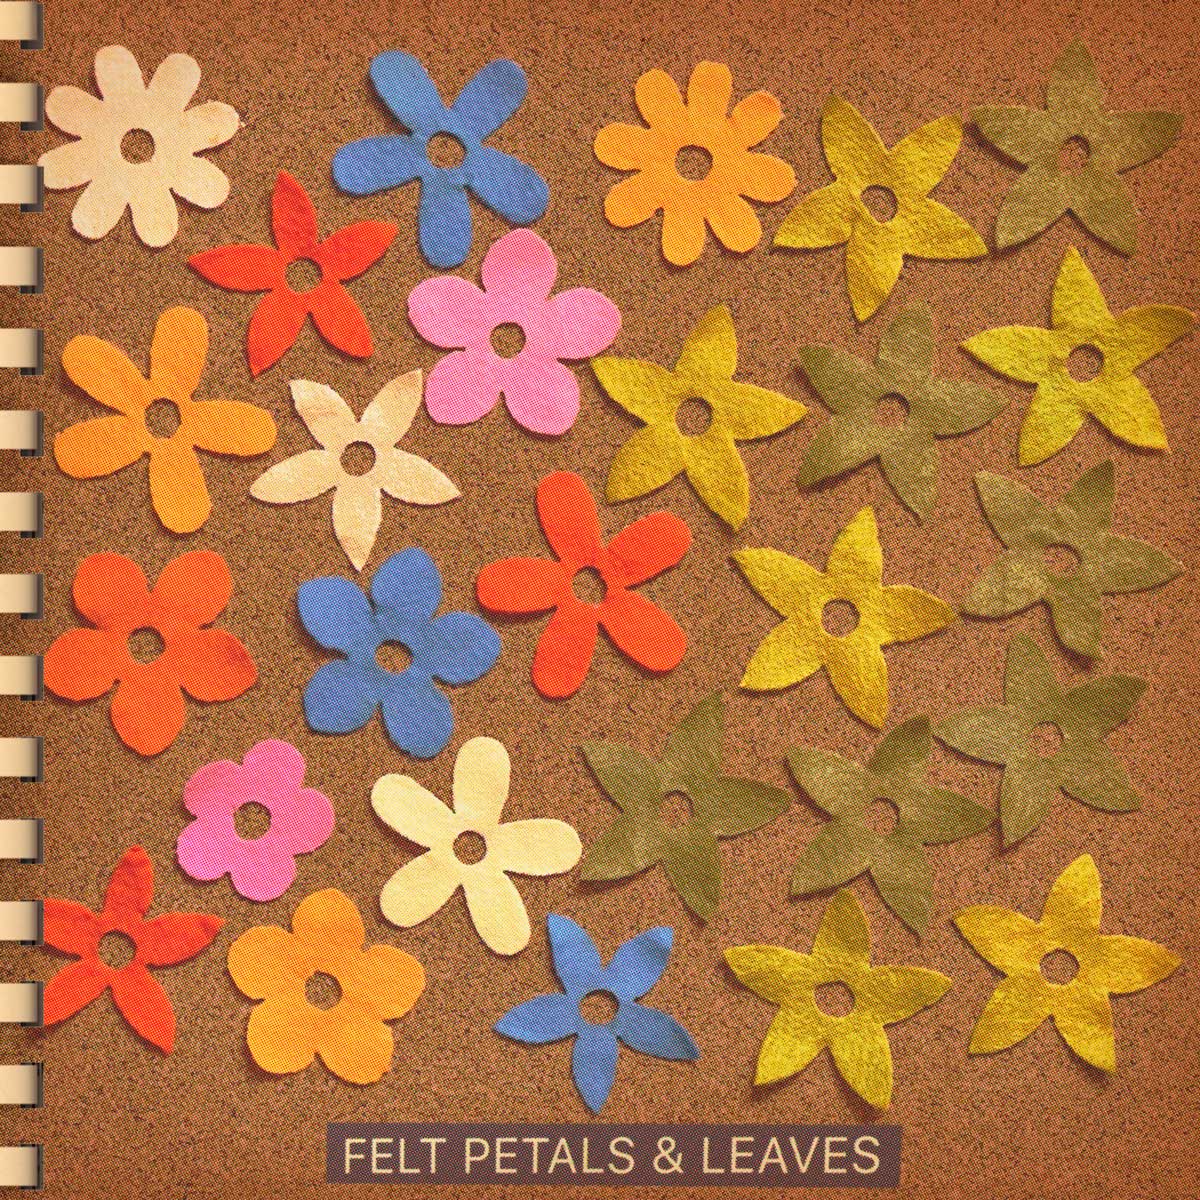 DIY retro felt flowers and leaves